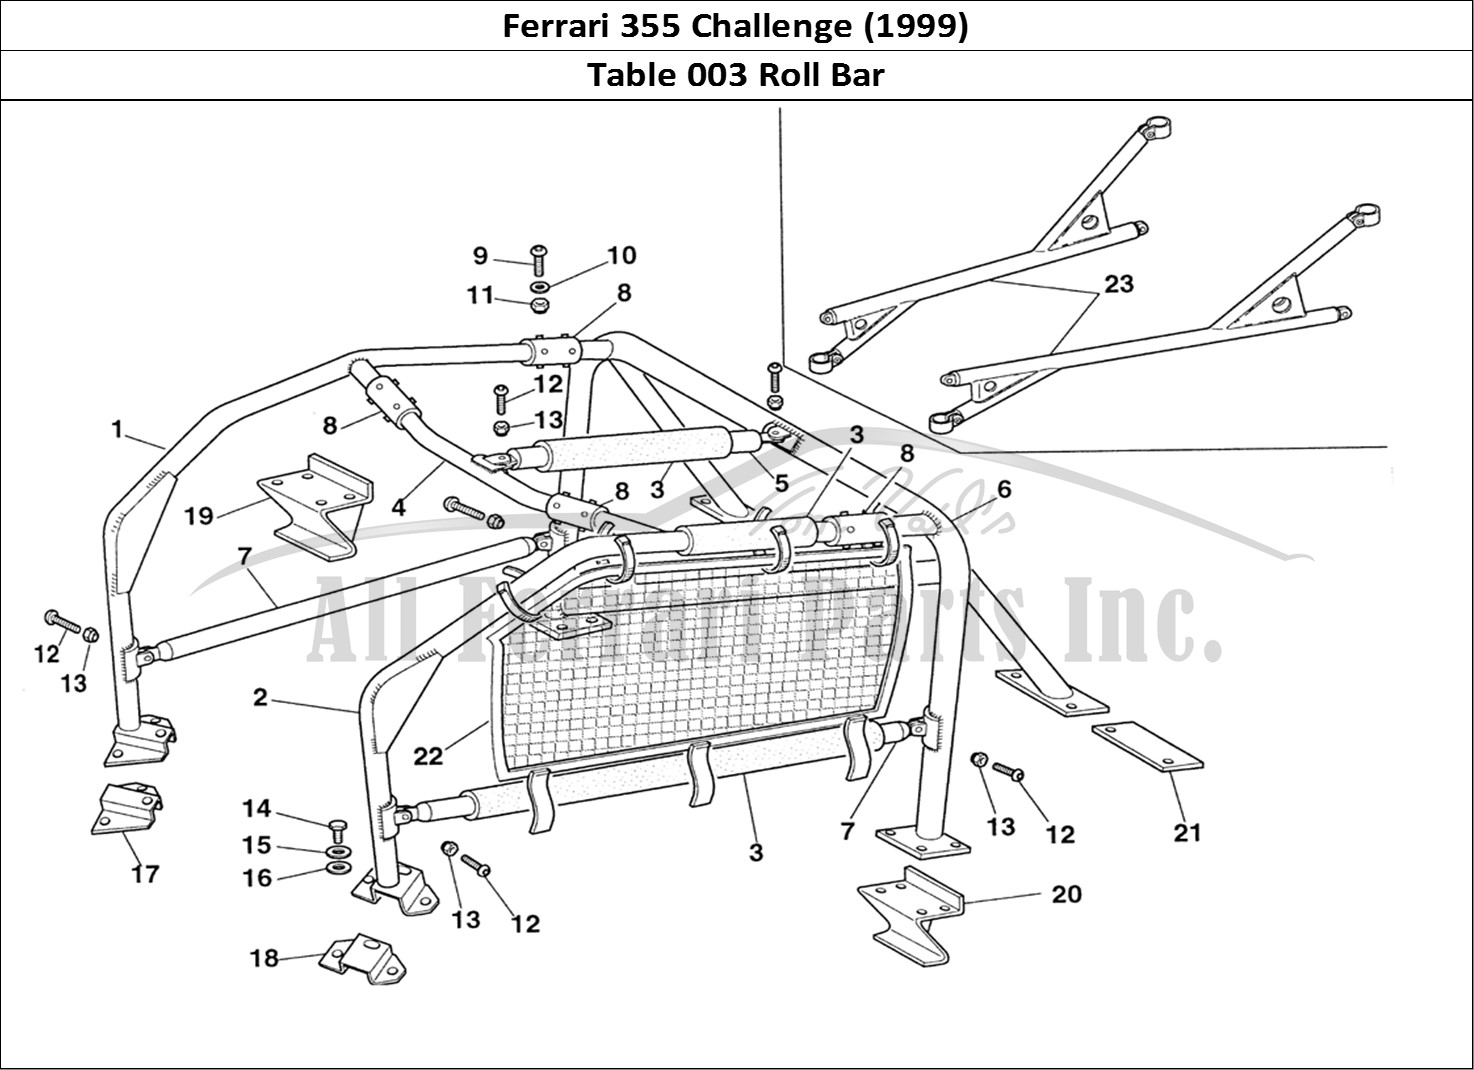 Ferrari Parts Ferrari 355 Challenge (1999) Page 003 Roll Bar